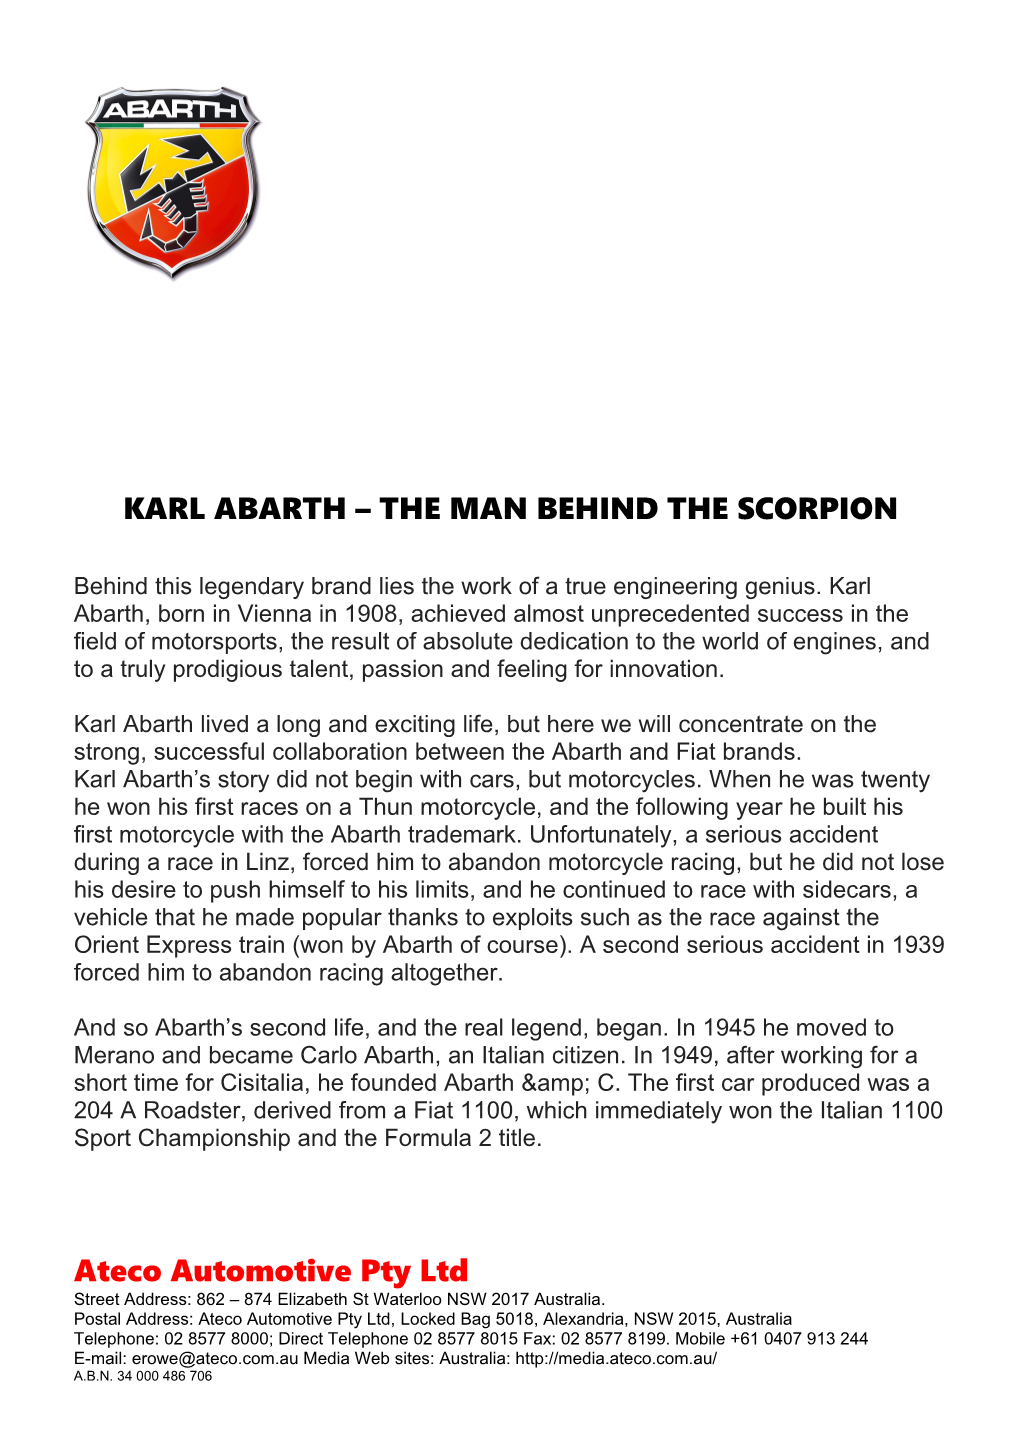 Karl Abarth the Man Behind the Scorpion